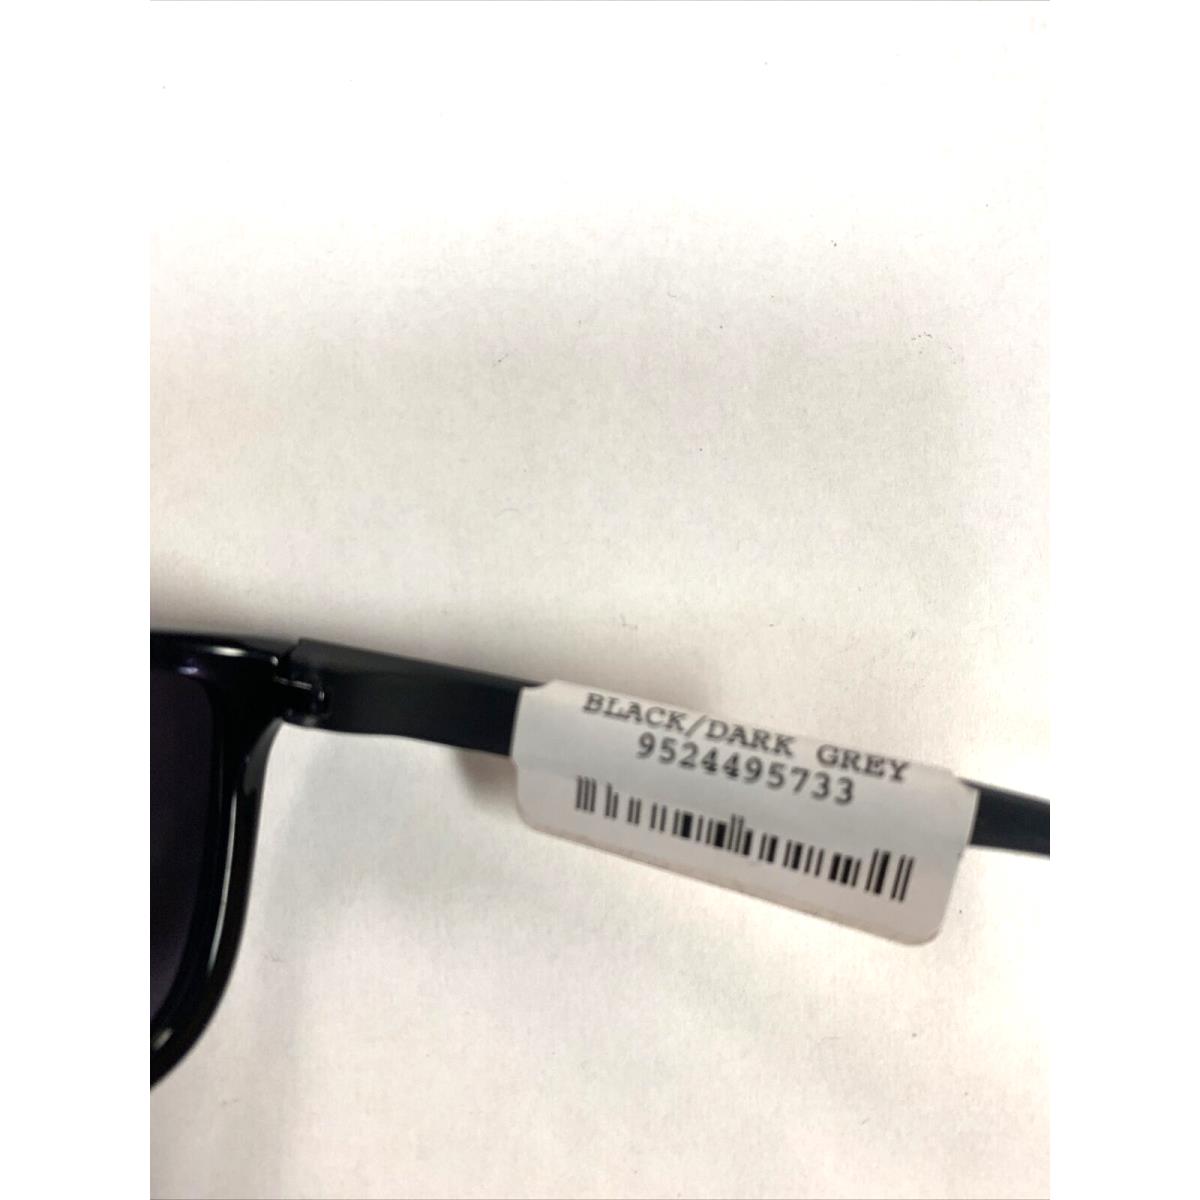 Nike sunglasses Dawn Ascent - Black Frame, Gray Lens, 010 Black/Dark Grey Code 4